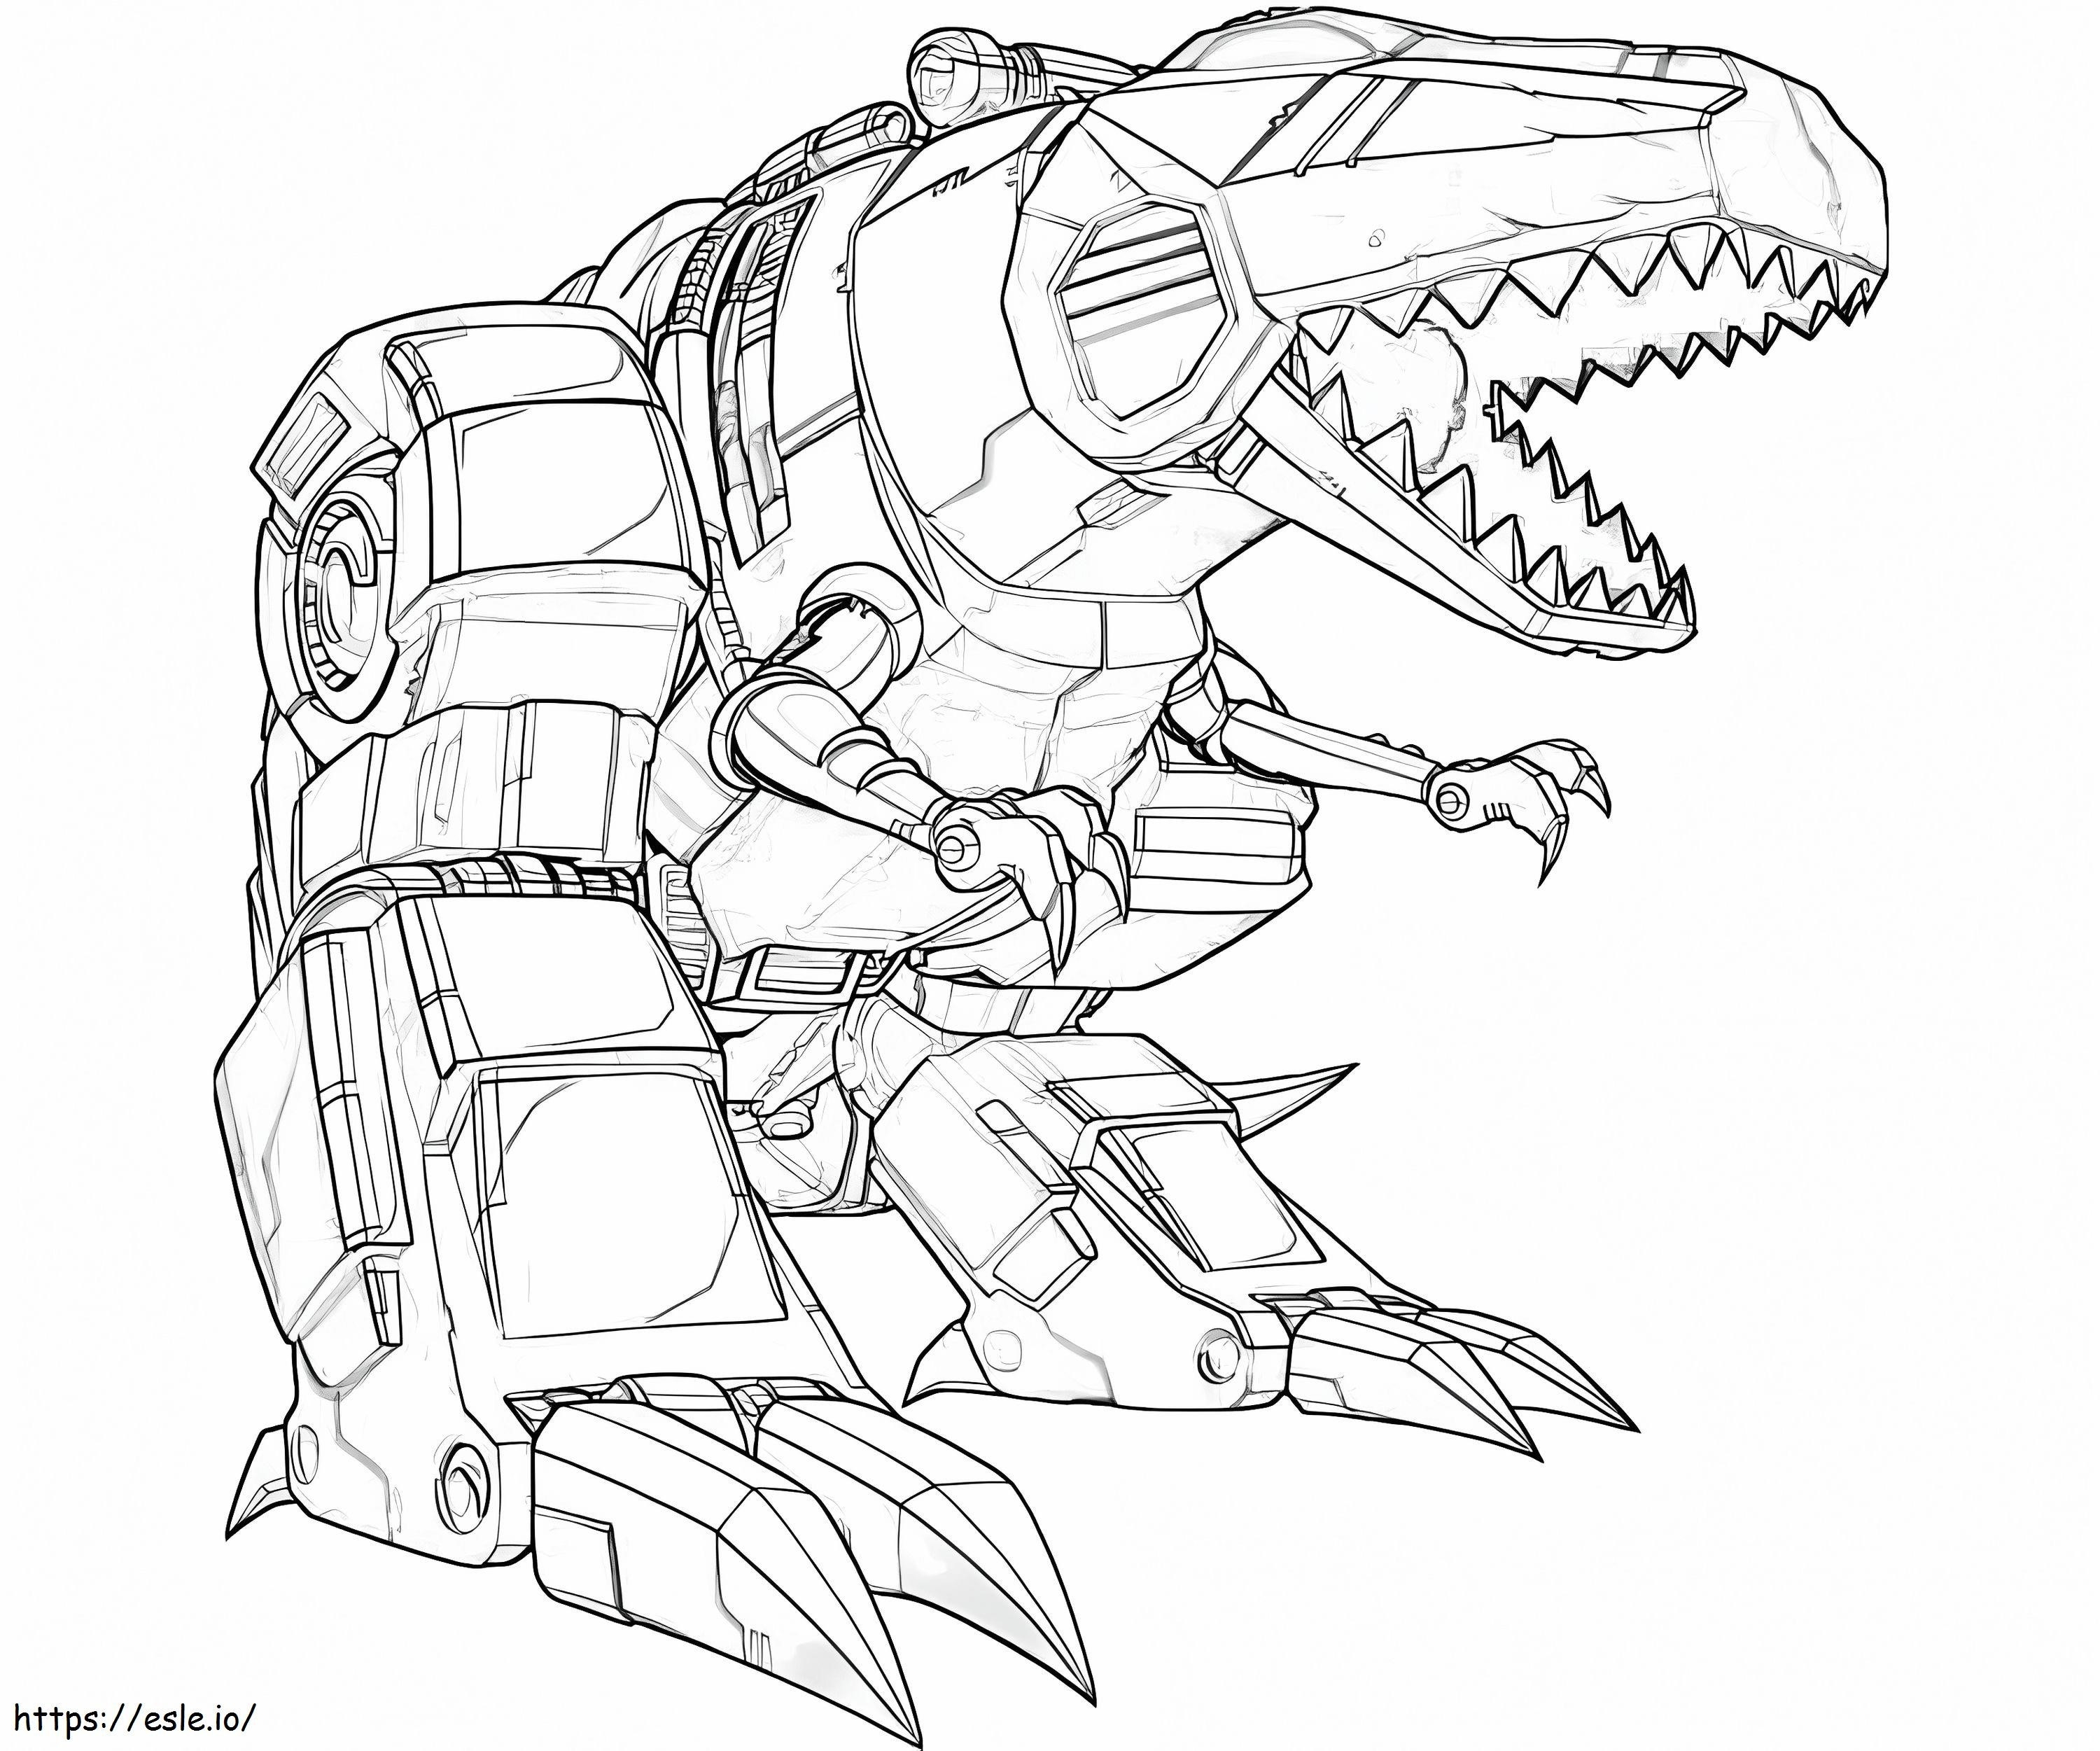 Coloriage Dinobot à imprimer dessin